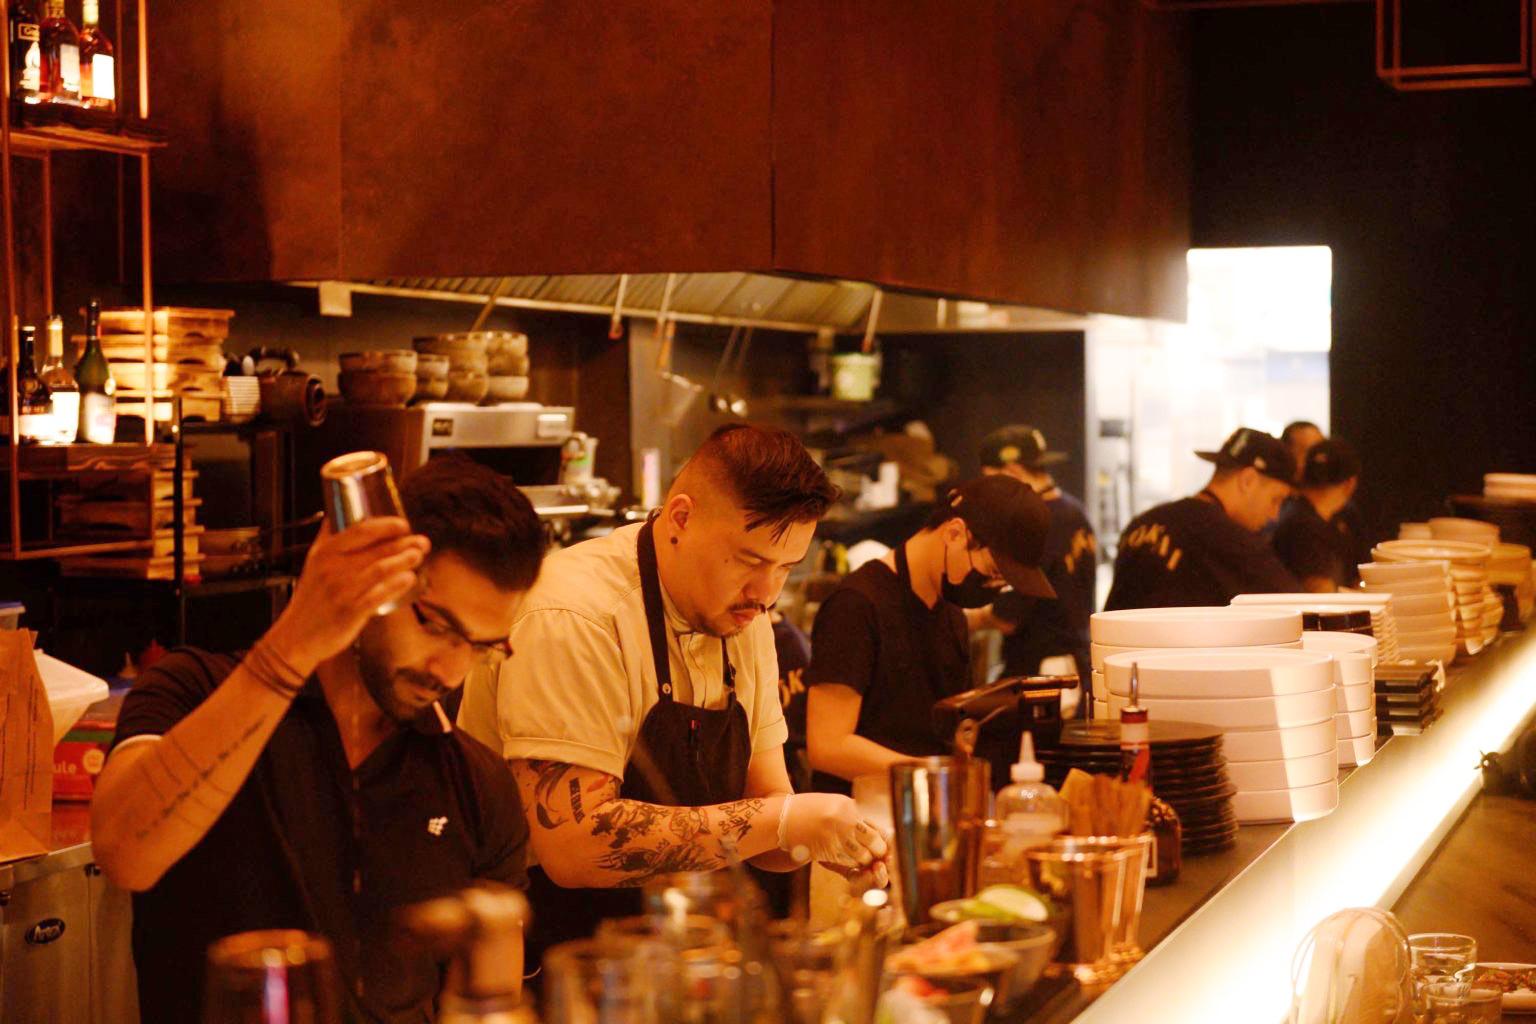 Several chefs cook inside a restaurant’s kitchen.